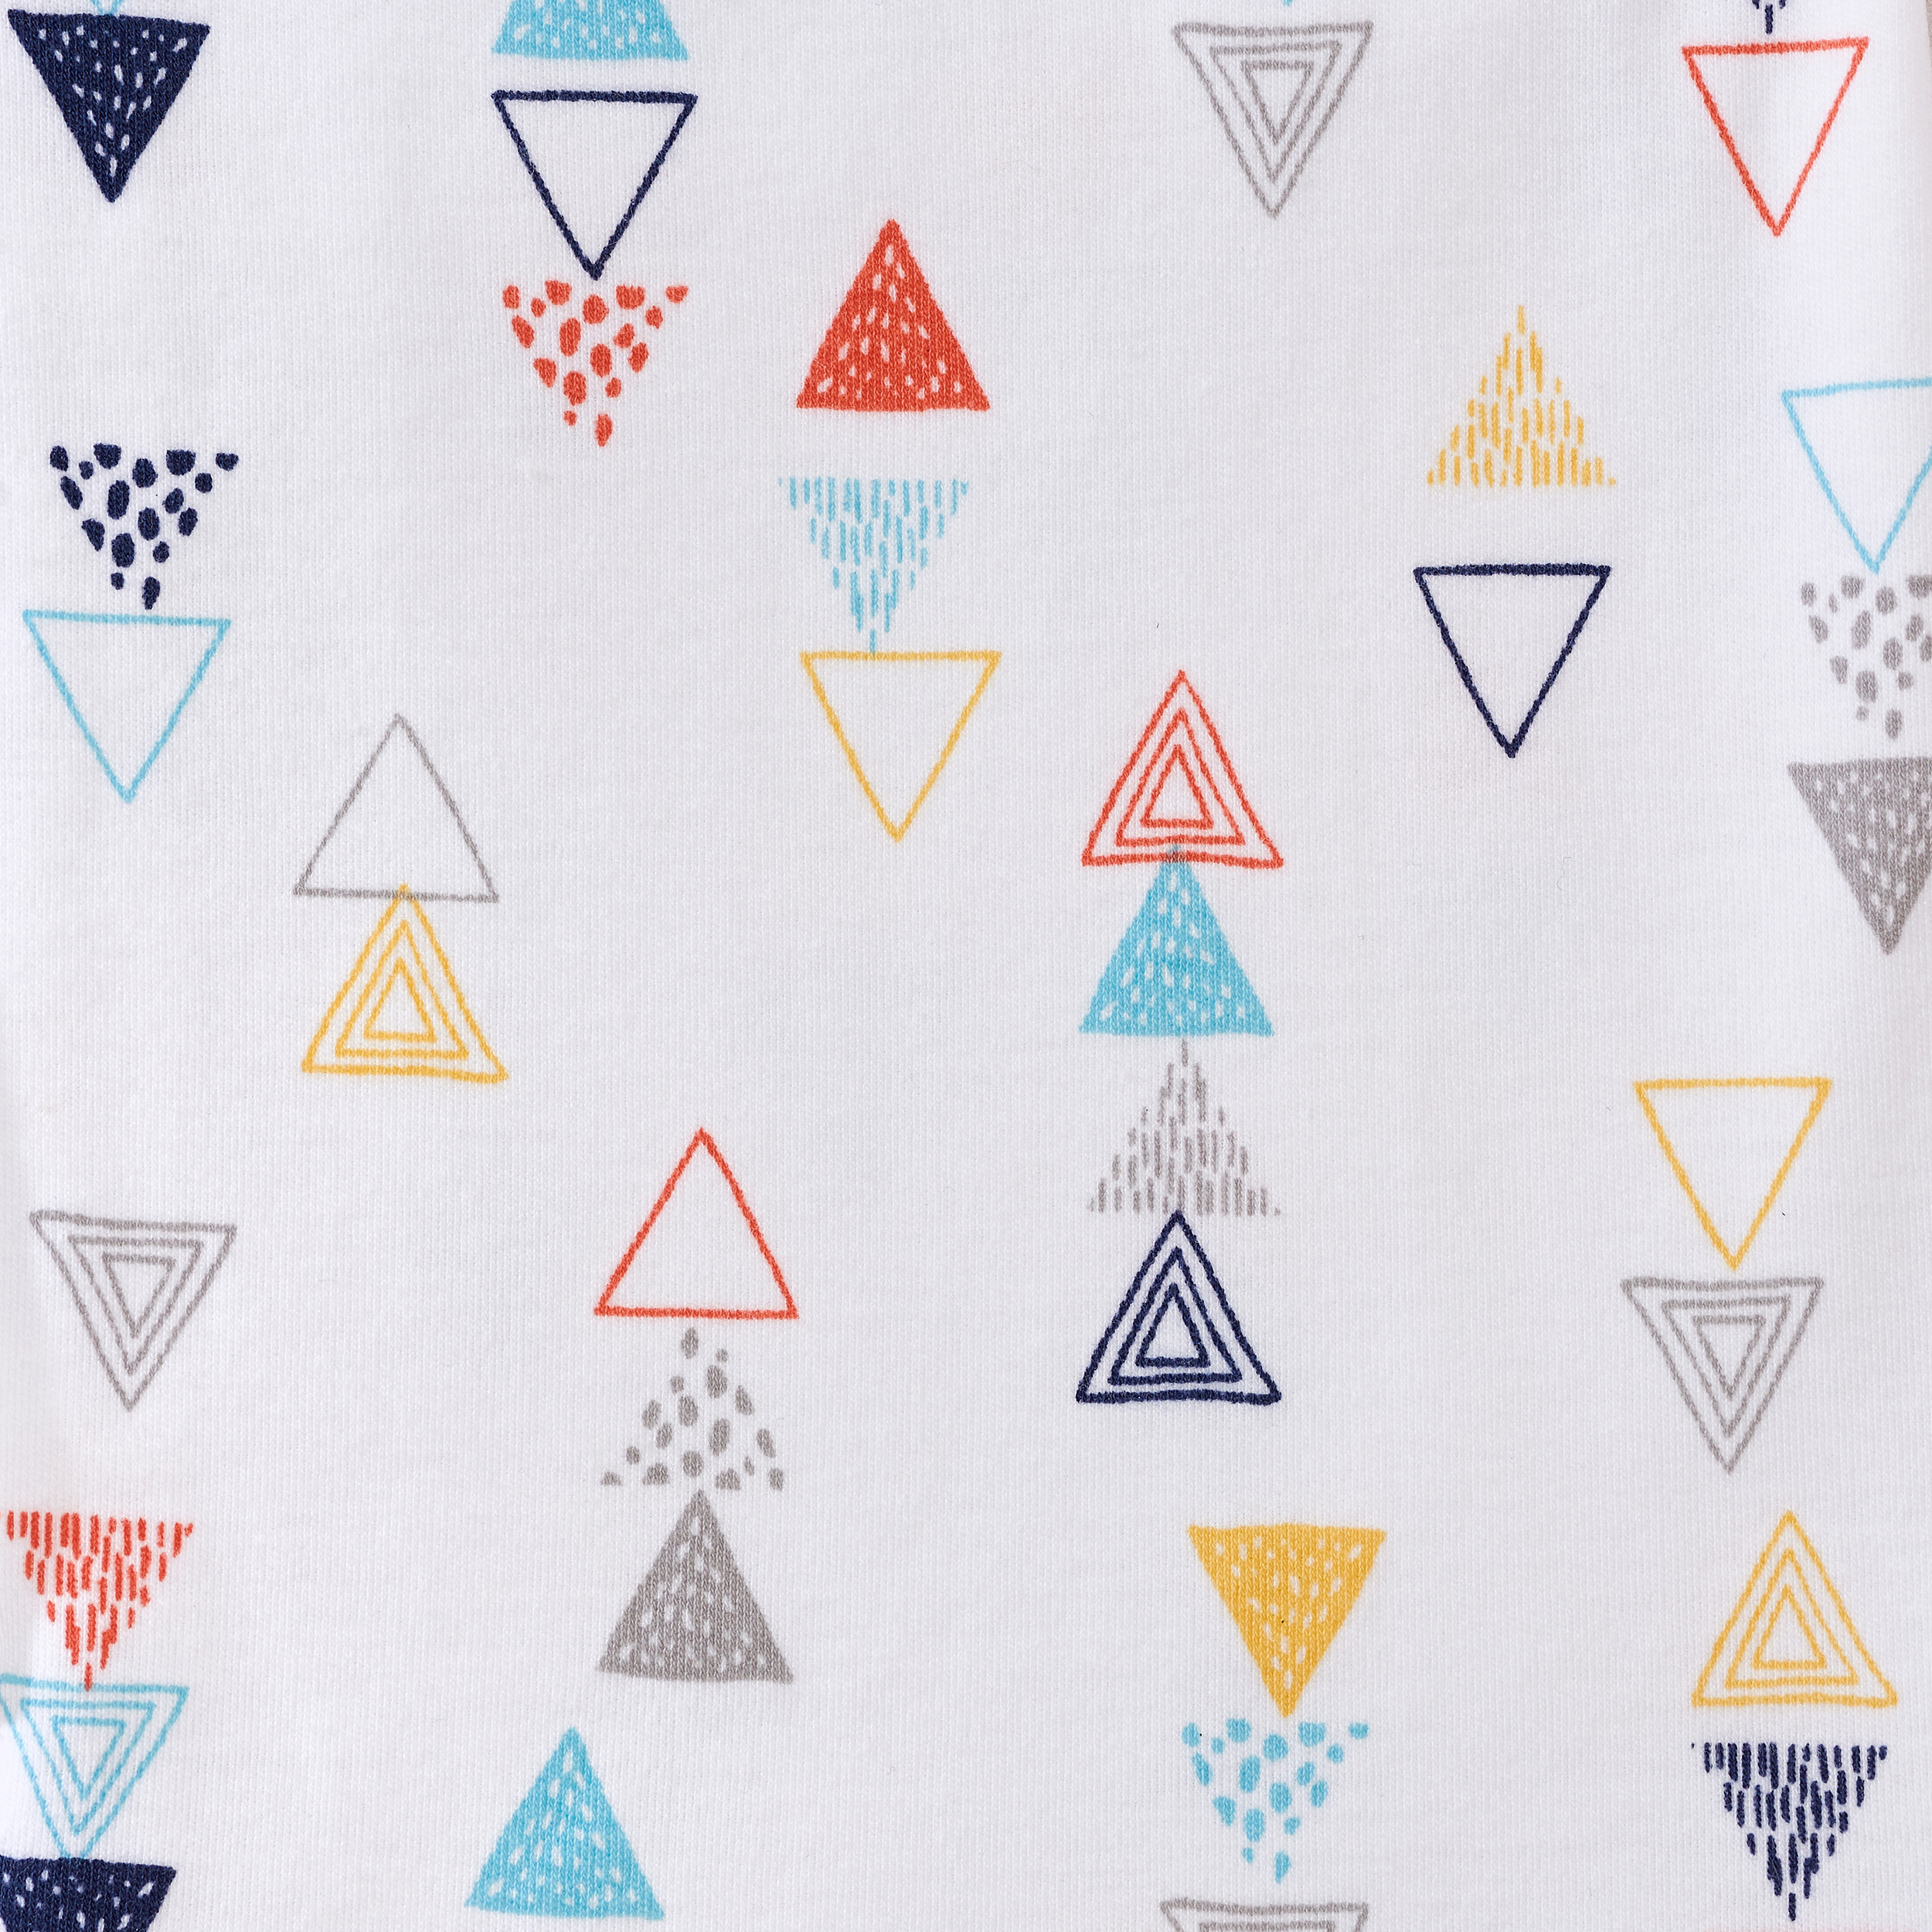 Halo Sleep Sack Multi Color Triangle Print Swaddle Wearable Blanket Safe Sleep 